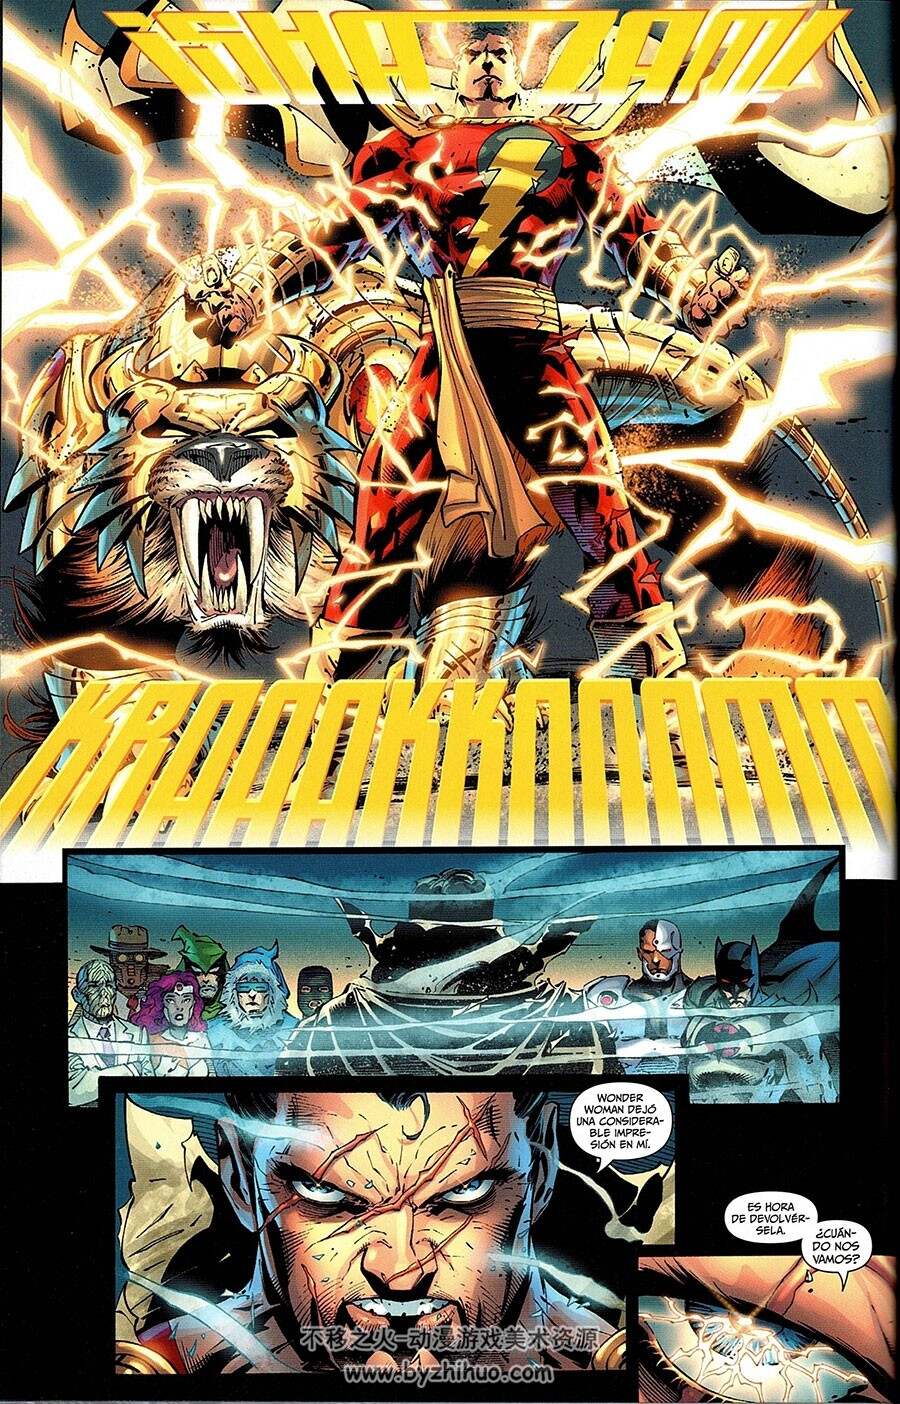 Flashpoint 全一册 Geoff Johns - Andy Kubert 西班牙语欧美超级英雄漫画